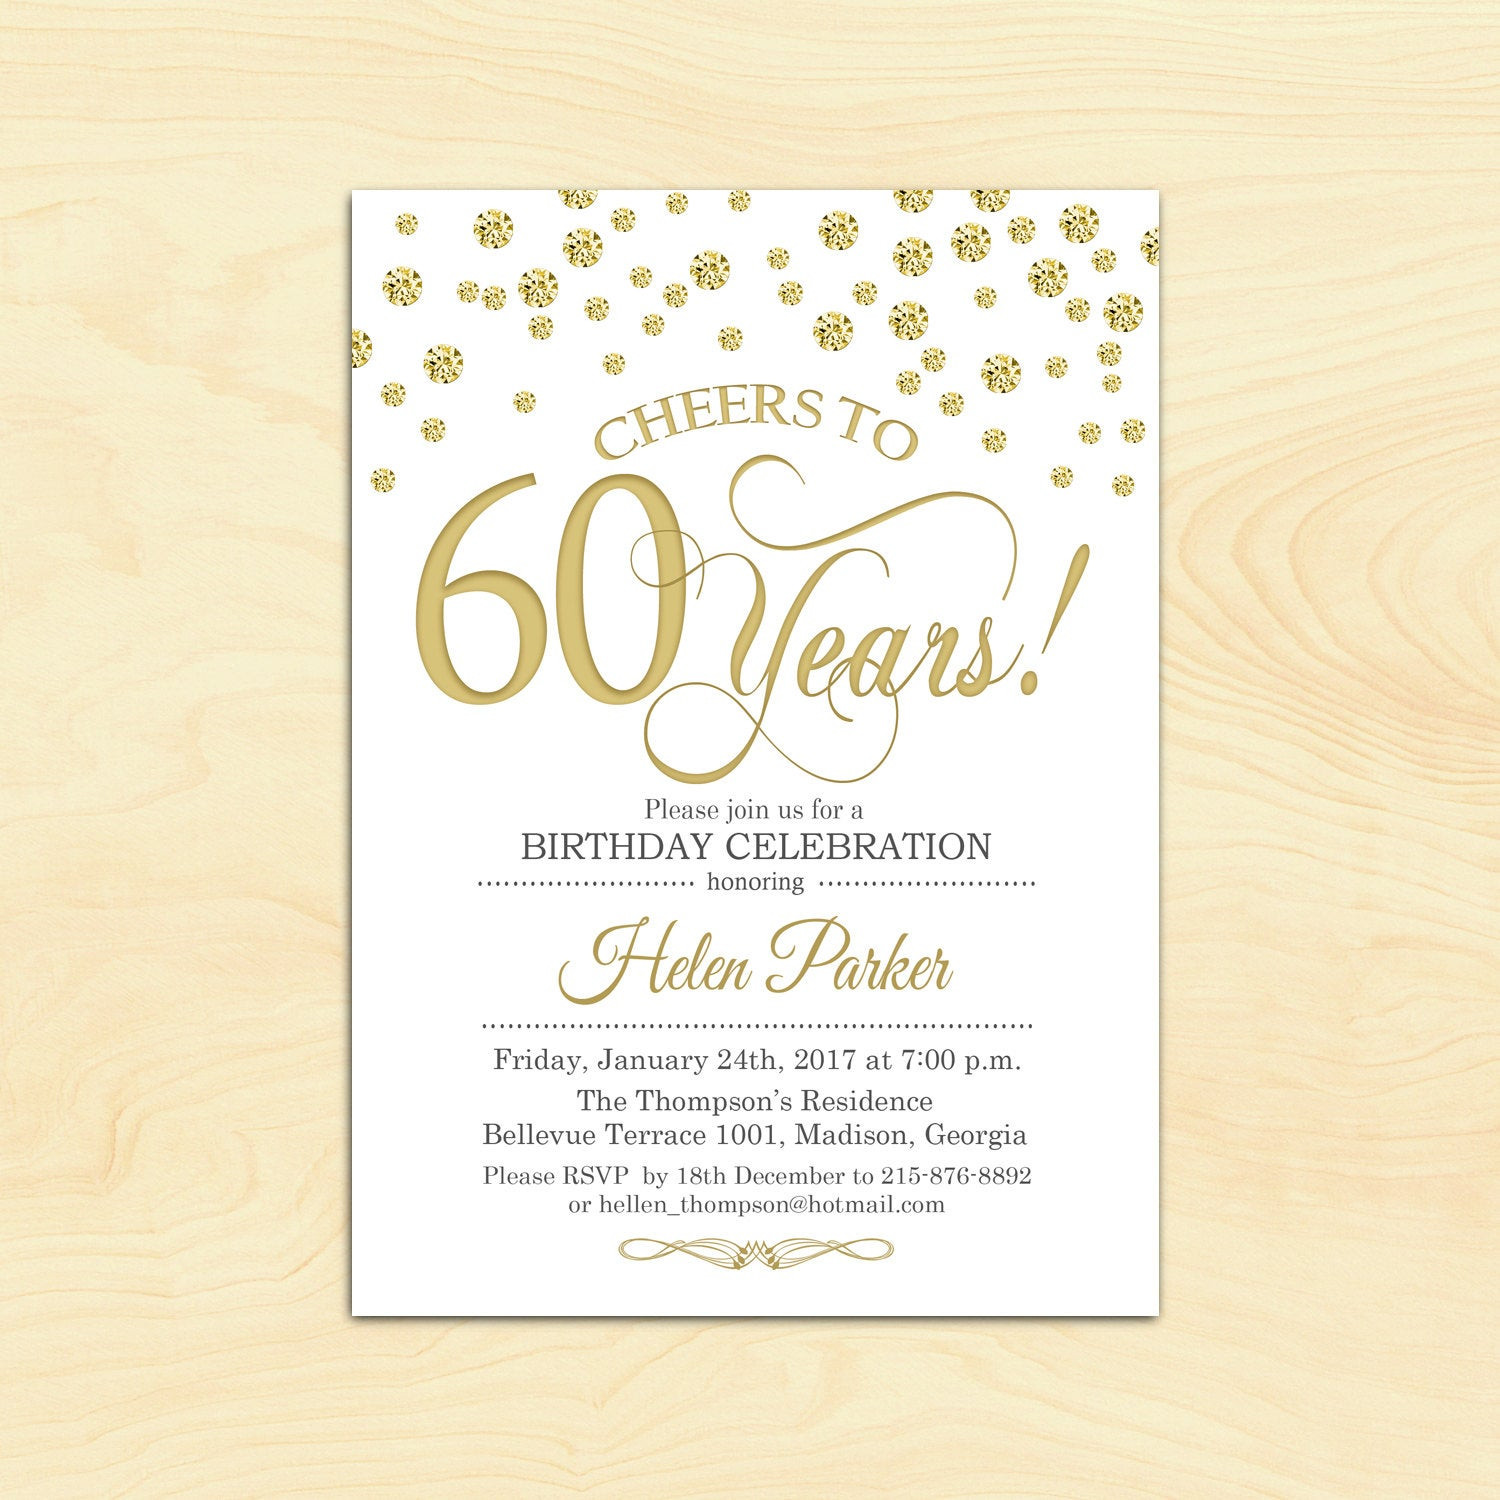 60Th Birthday Invitation Ideas
 60th Birthday Invitation Any Age Cheers to 60 Years Gold